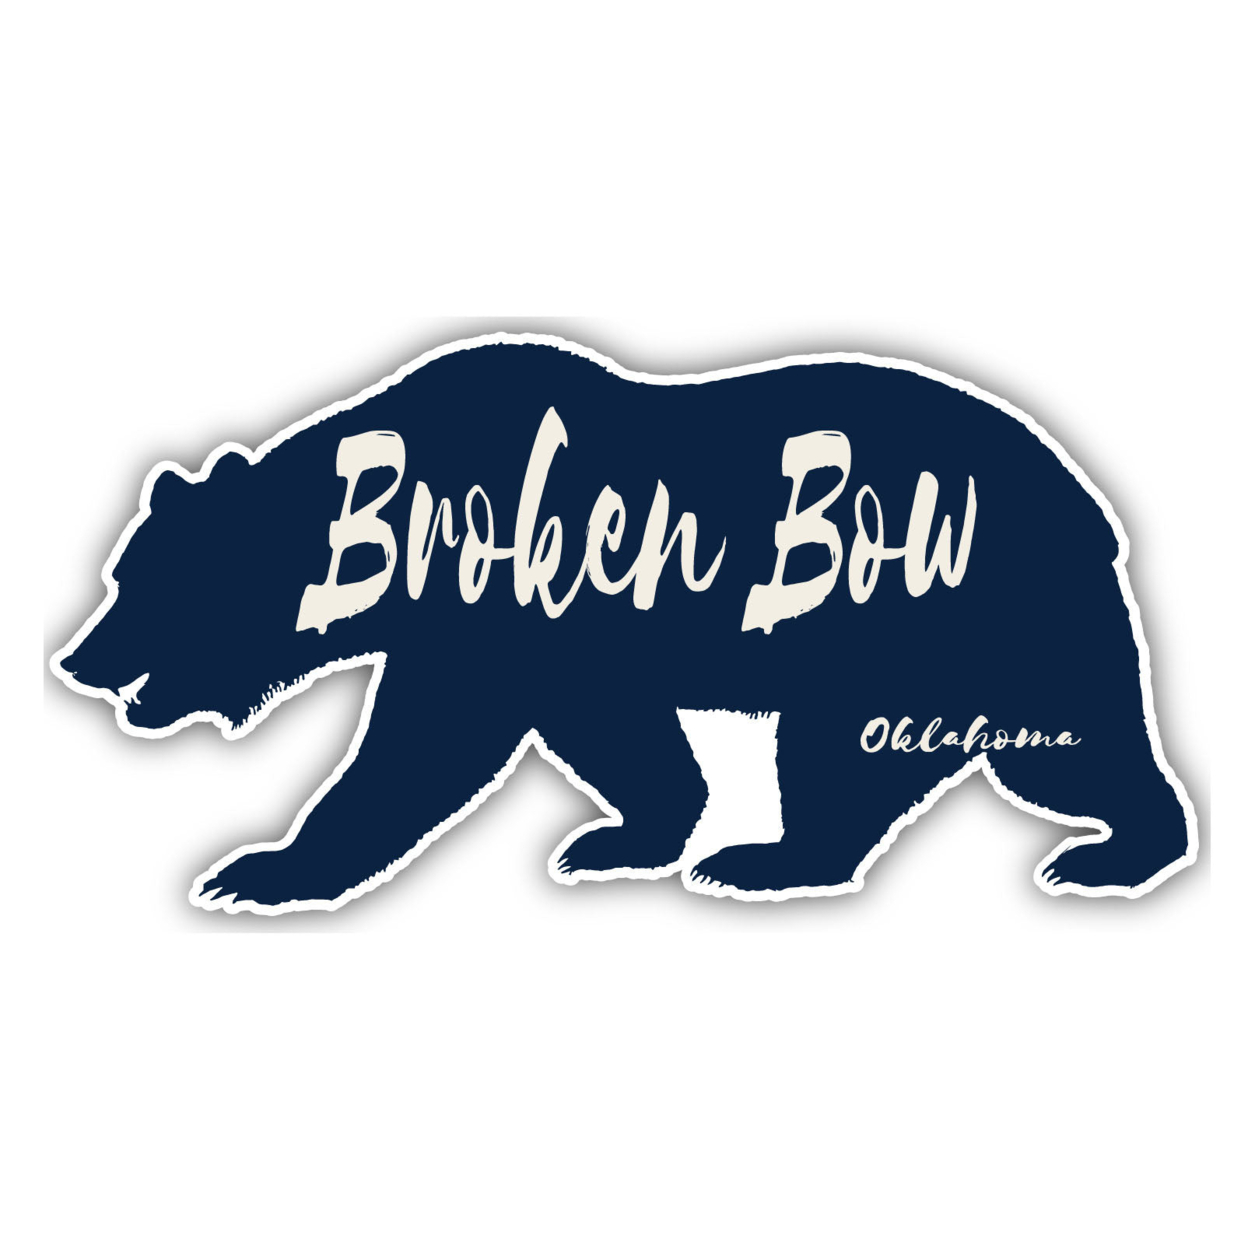 Broken Bow Oklahoma Souvenir Decorative Stickers (Choose Theme And Size) - Single Unit, 4-Inch, Bear